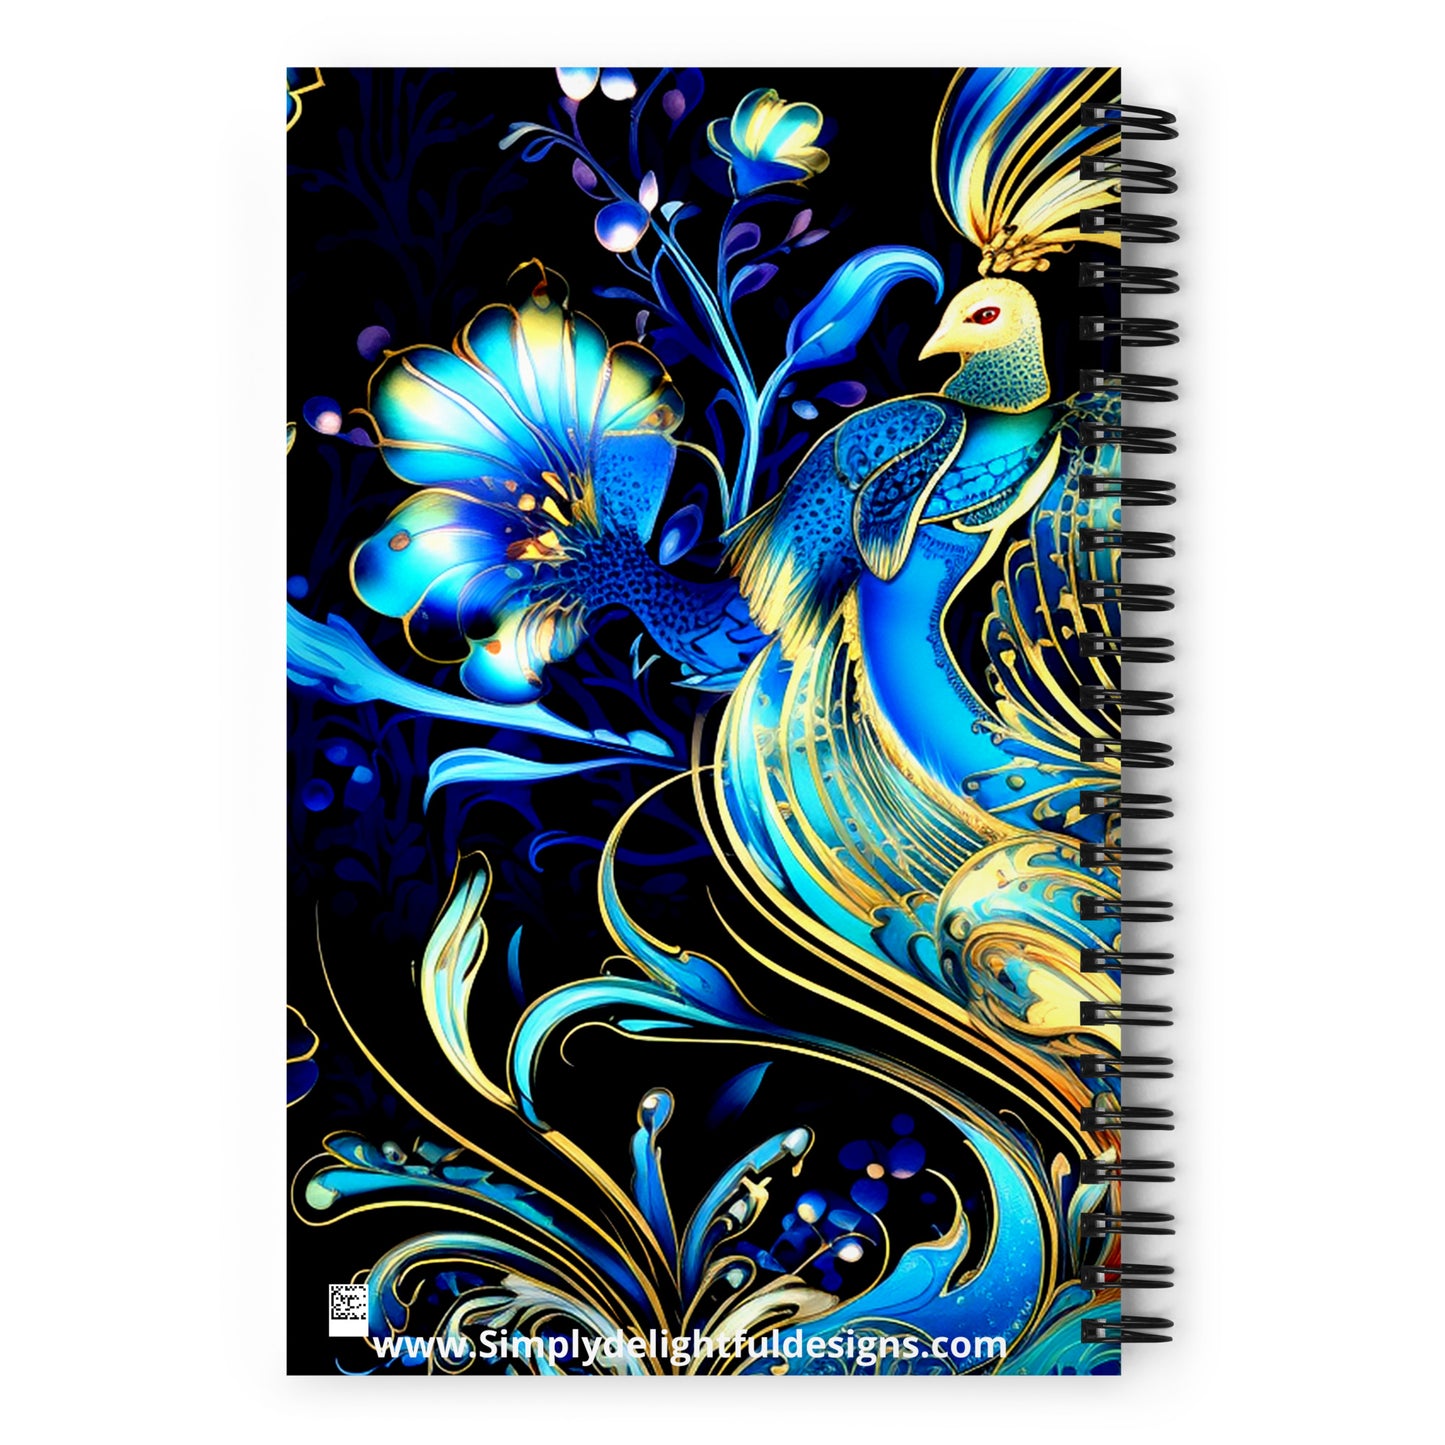 Mystical Blue Notebook